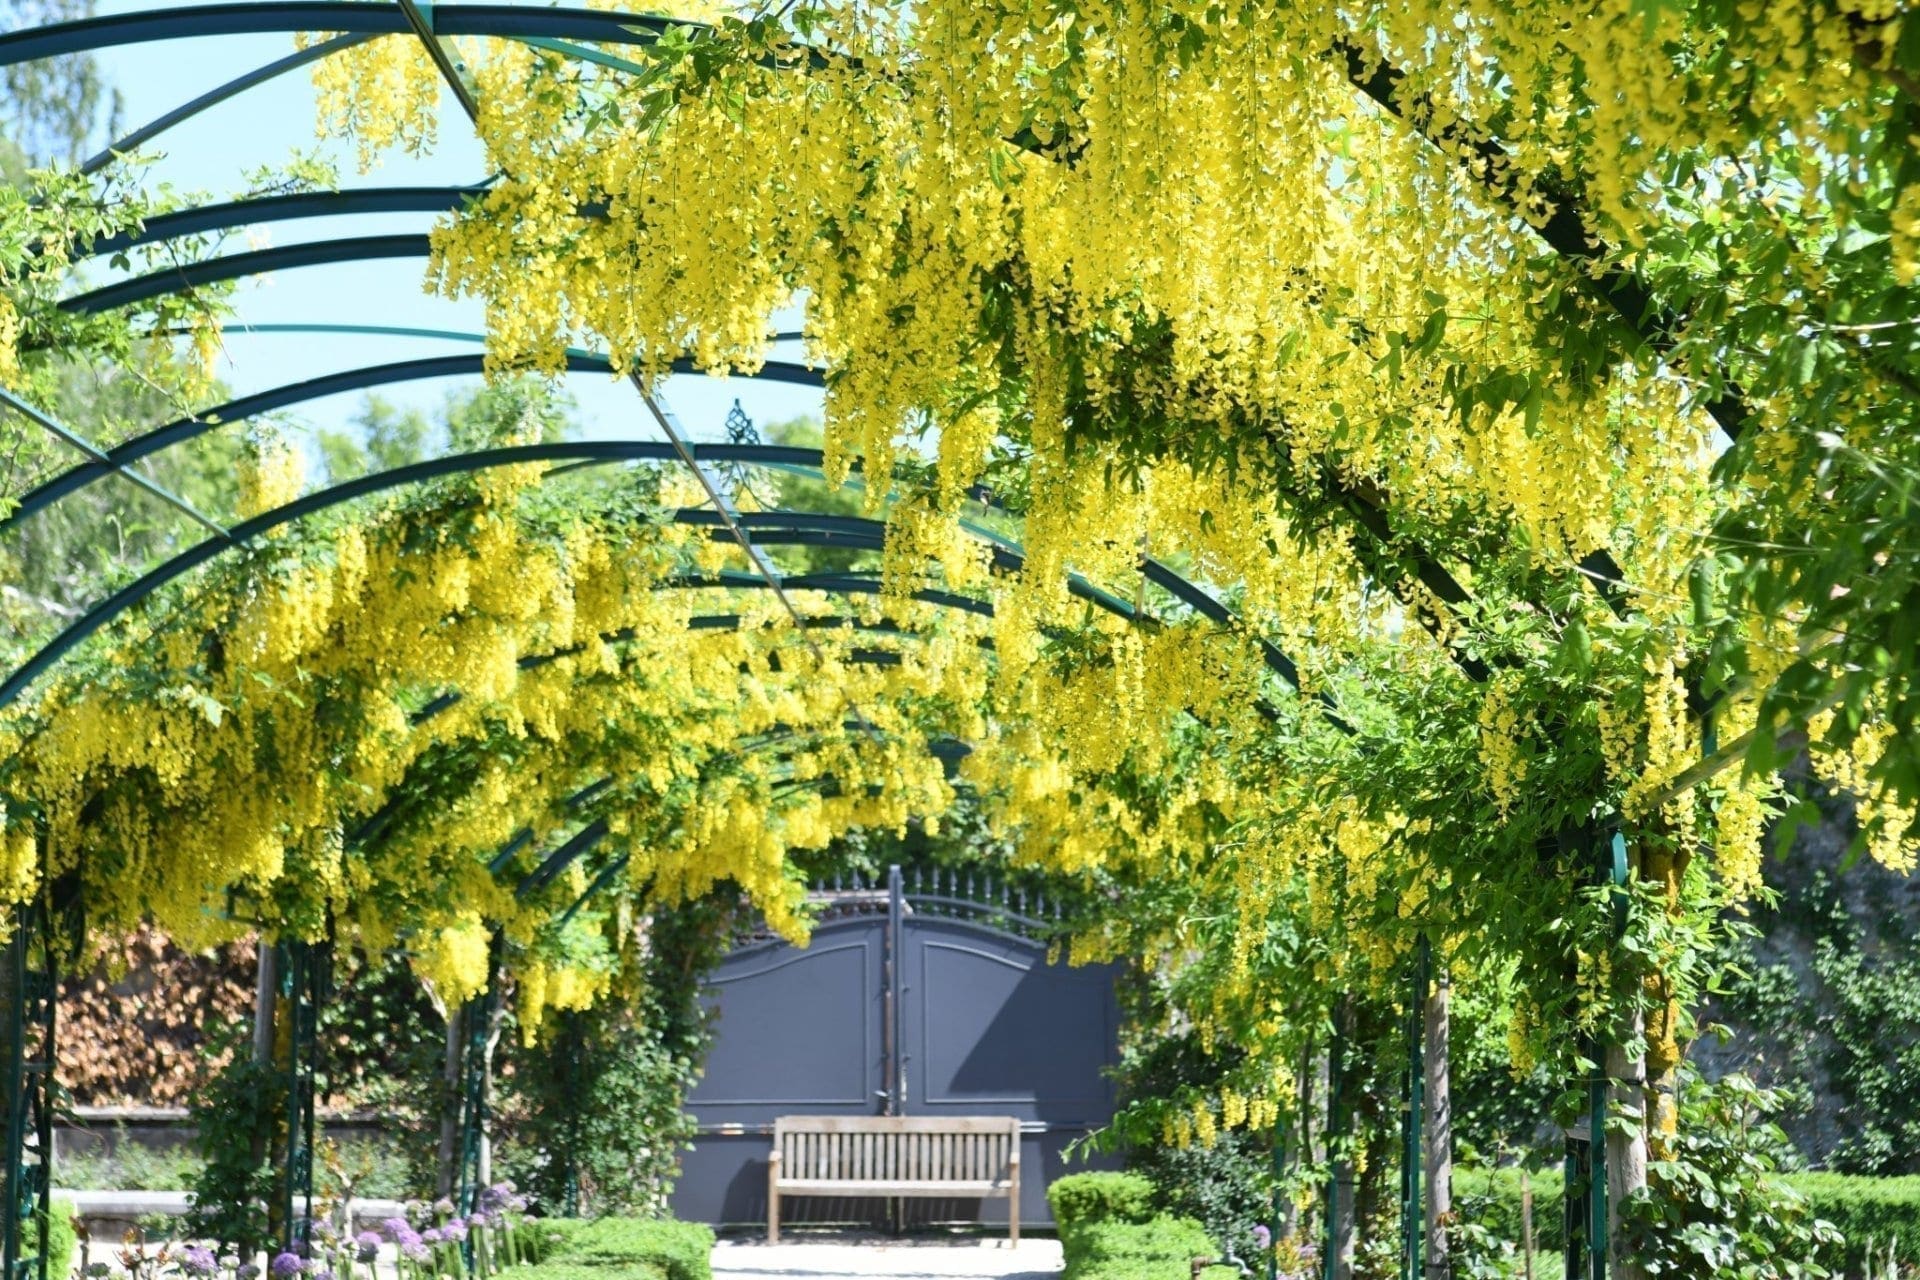 Le tunnel laburnum jaune vif dans le jardin de Doreen.